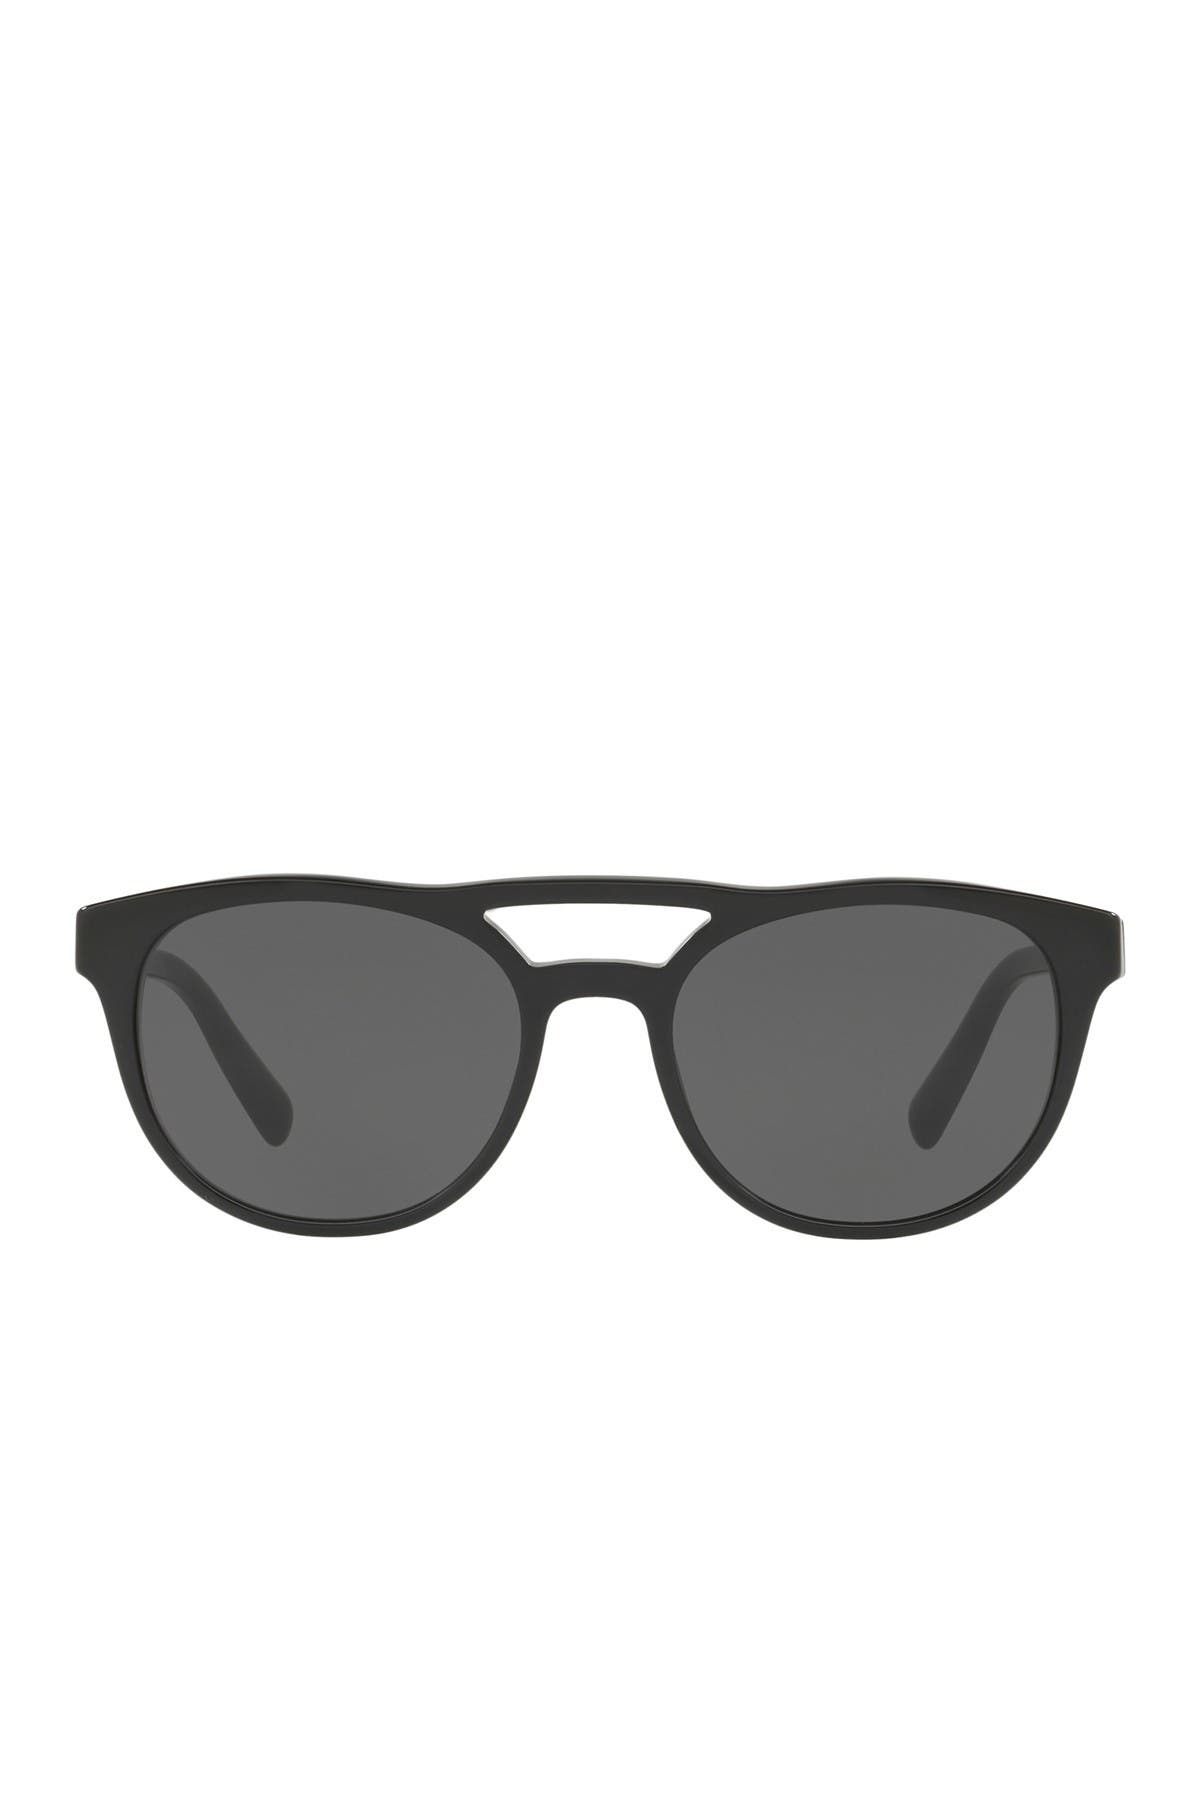 prada 54mm round aviator sunglasses